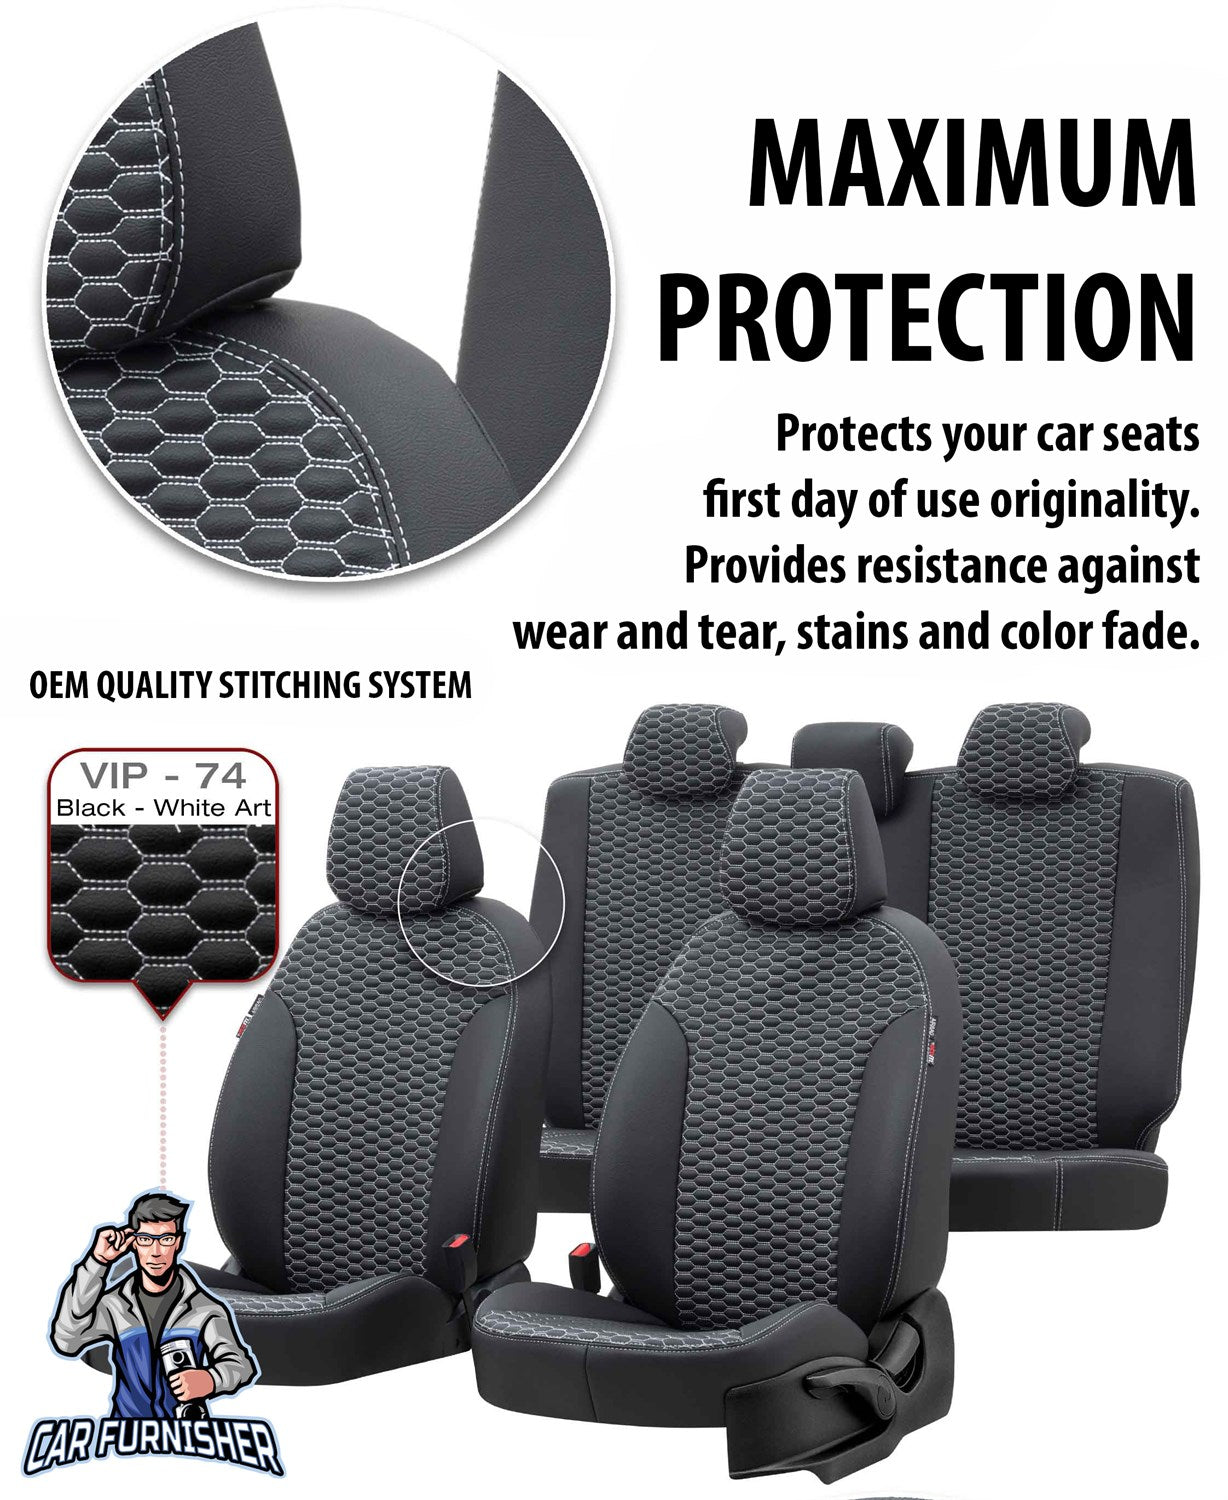 Honda Civic Seat Covers Tokyo Leather Design Dark Gray Leather